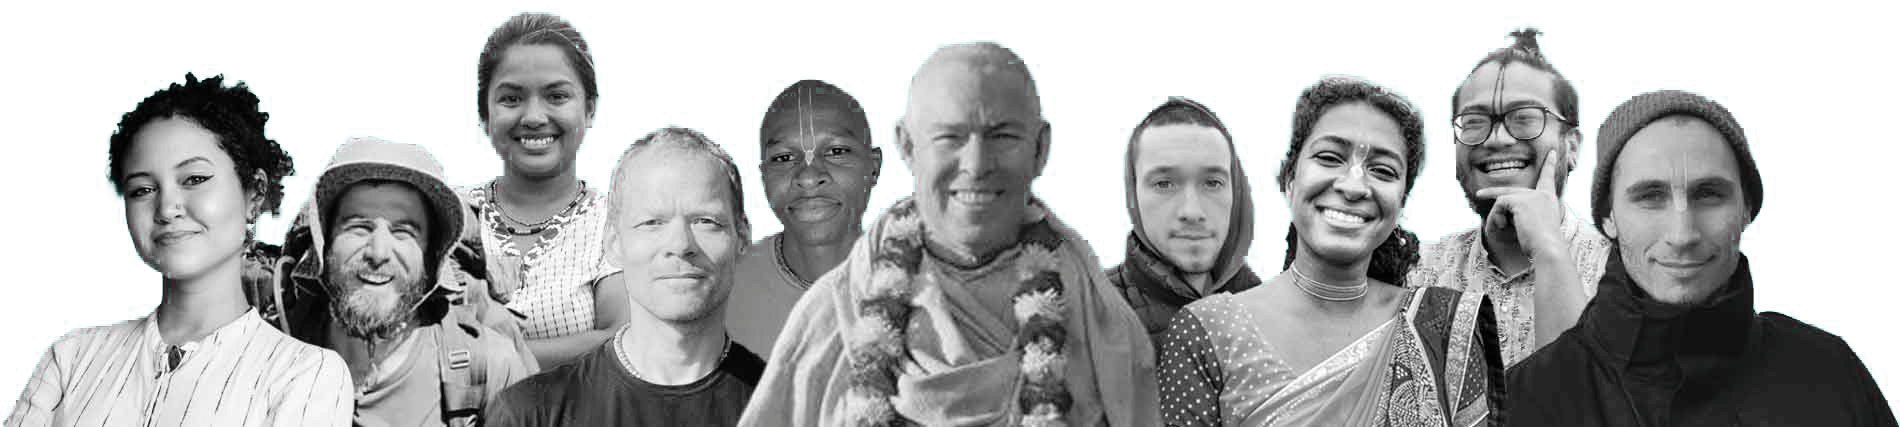 Chant Now - Dedicated Team of Bhakti Yogis